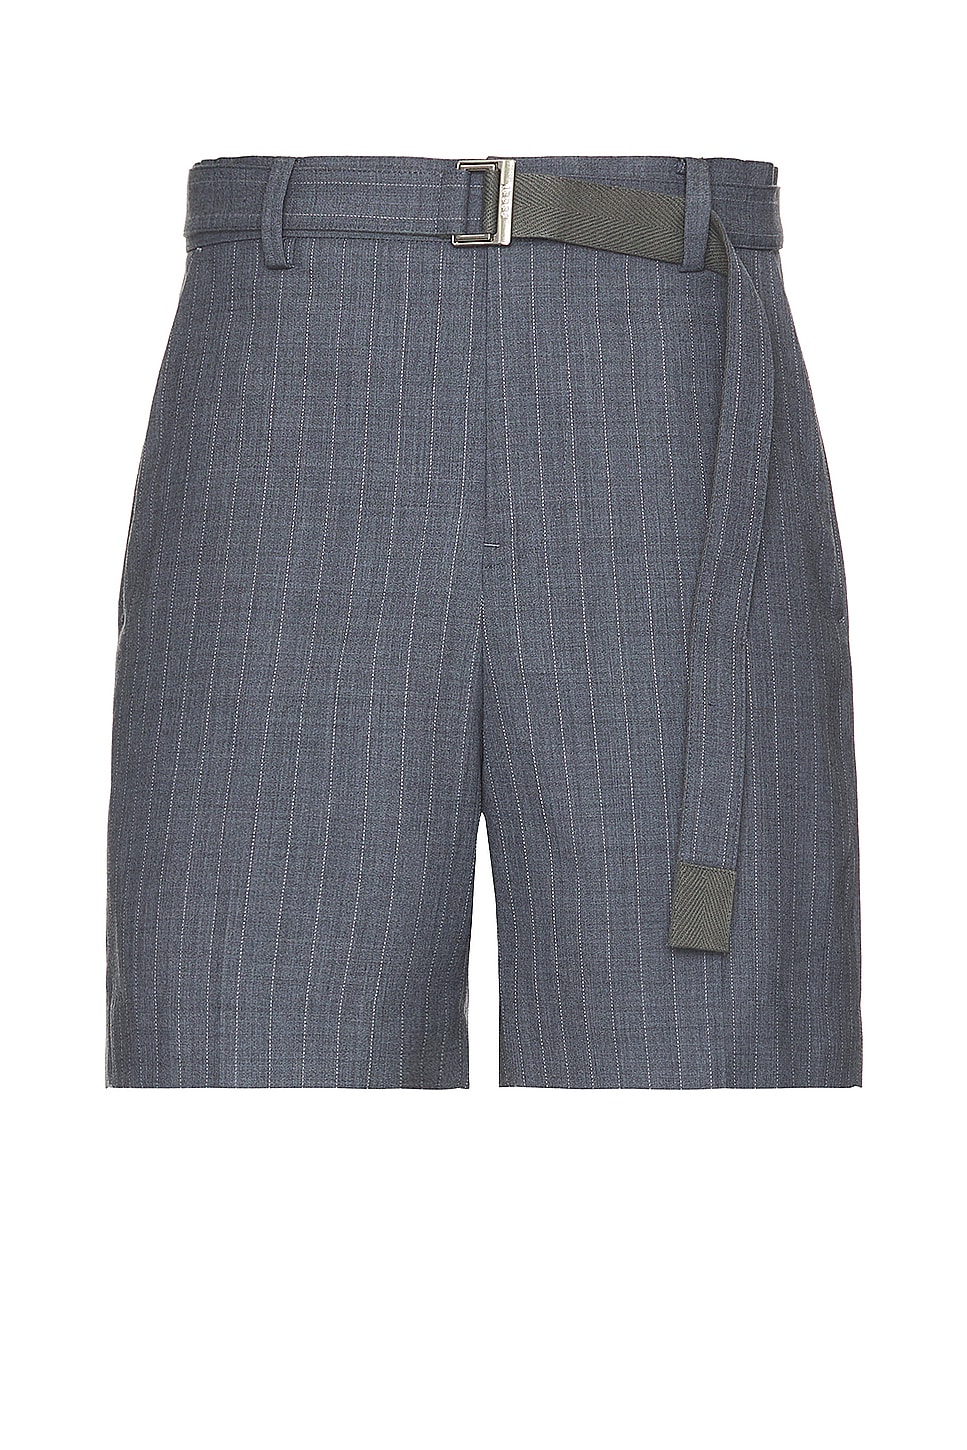 Image 1 of Sacai Chalk Stripe Shorts in Gray